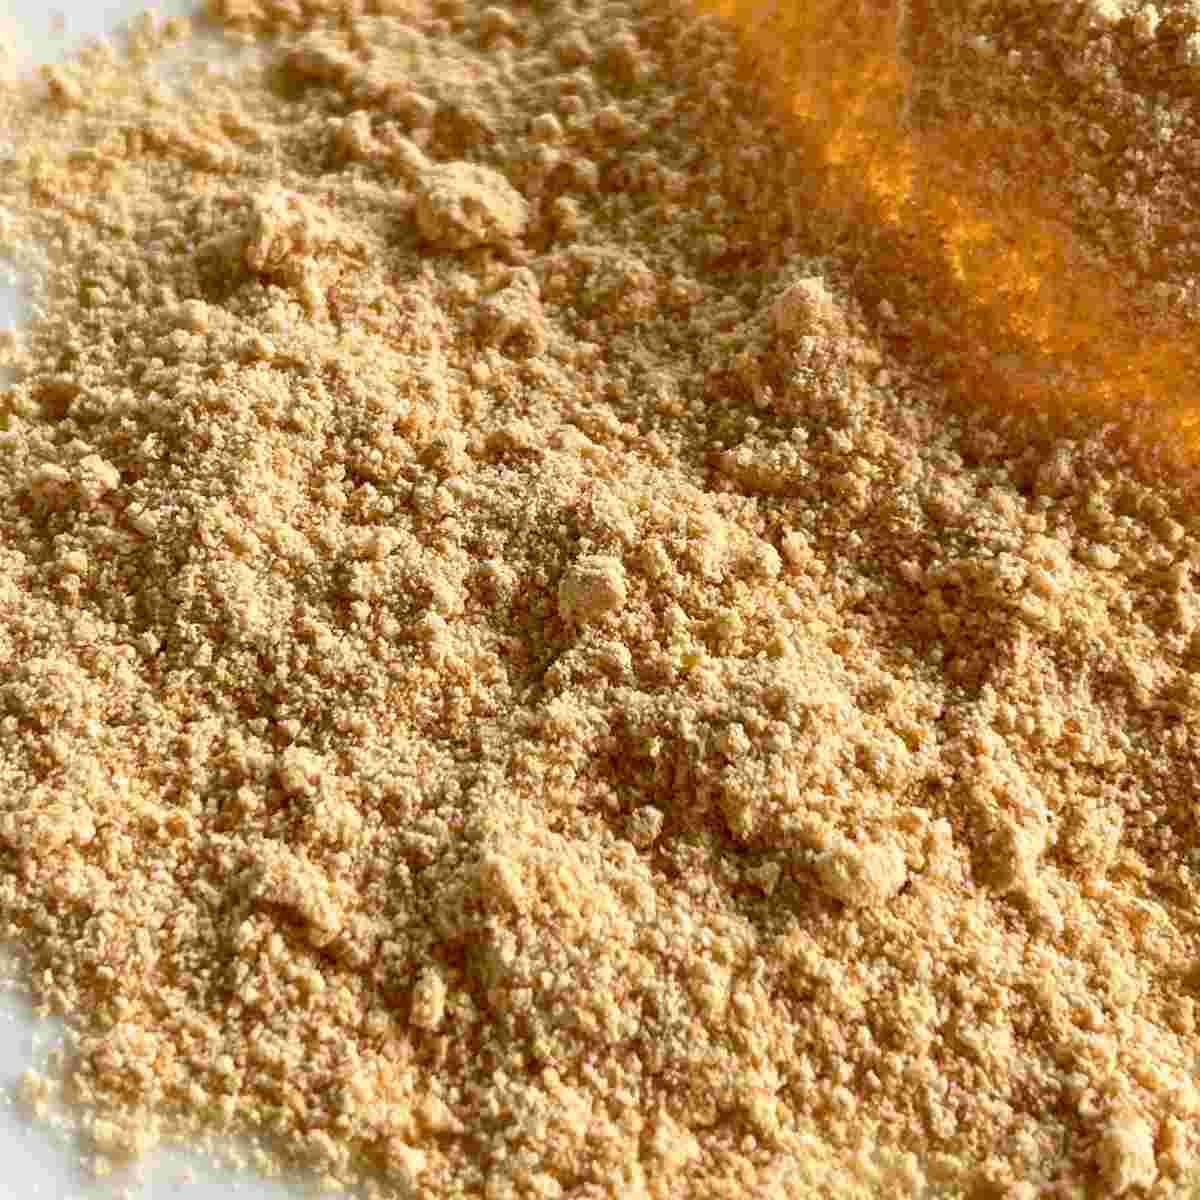 Kinako roasted soy bean powder